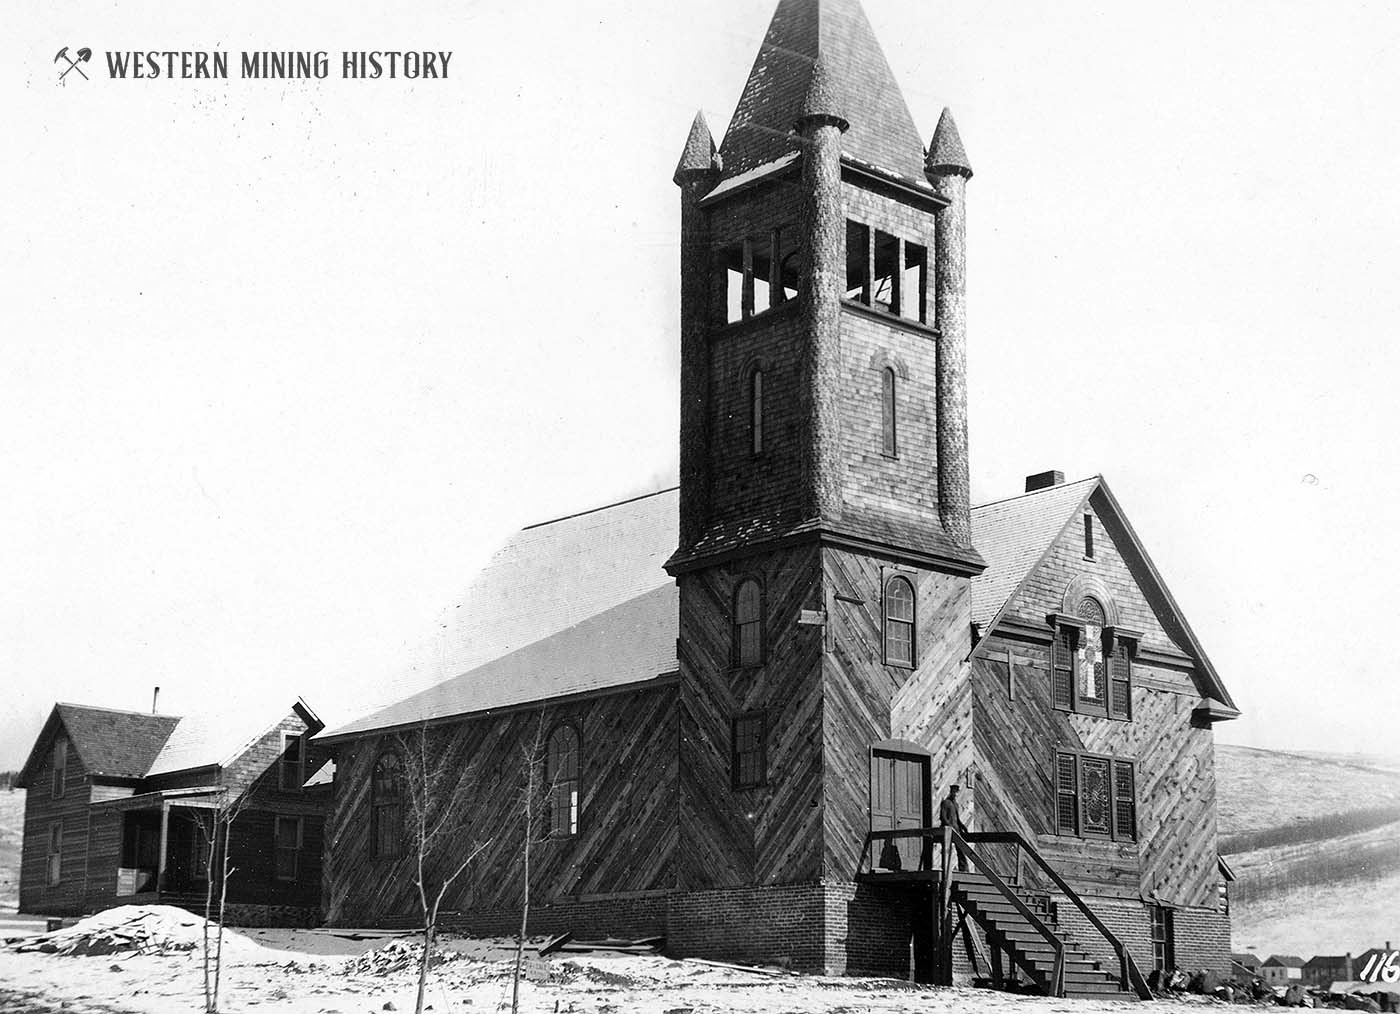 Catholic Church at Cripple Creek, Colorado ca. 1890s